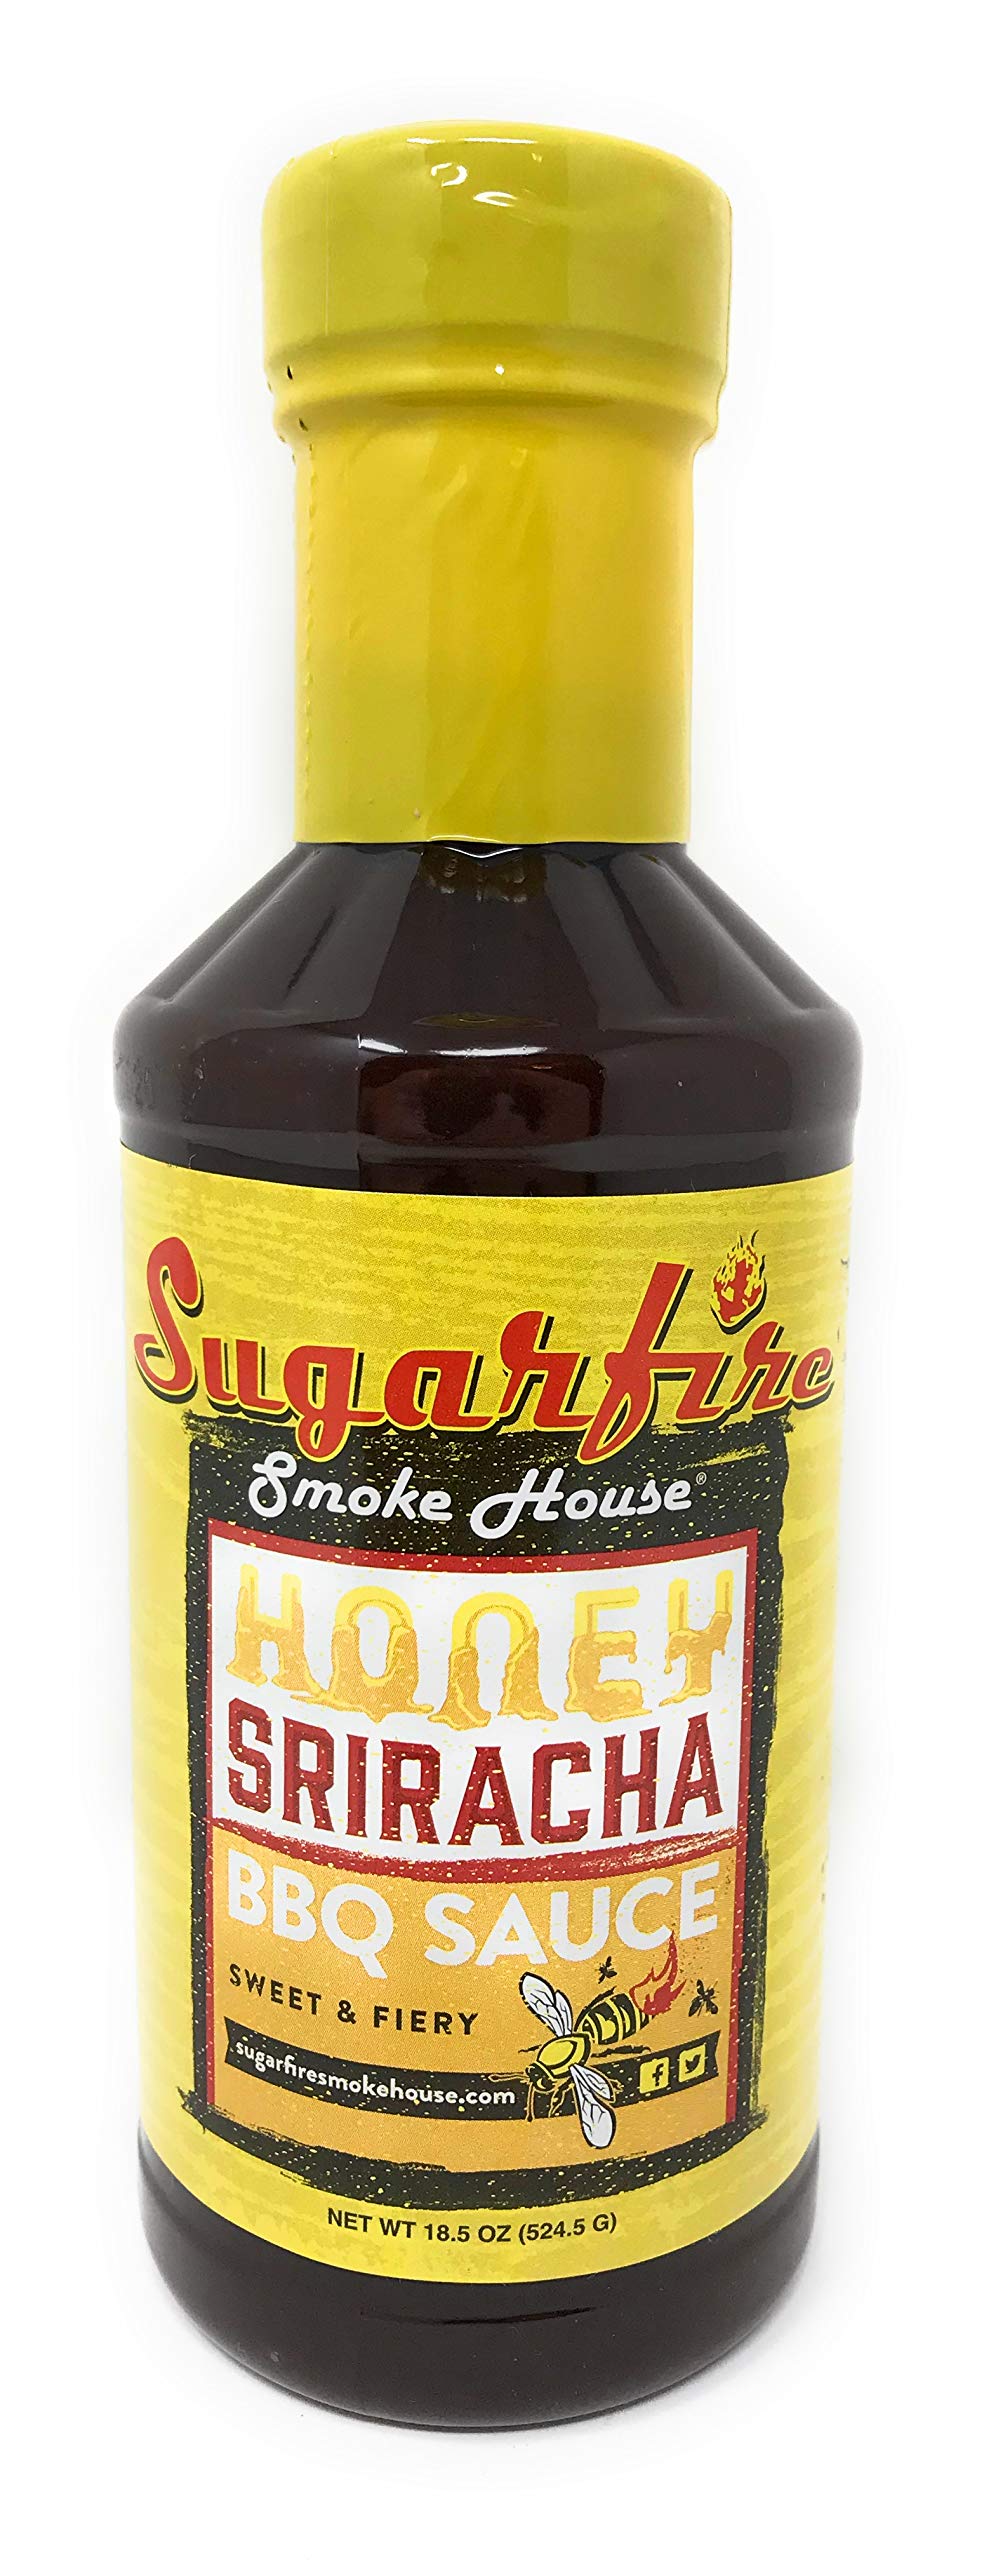 Sugarfire Smoke House Honey Siracha Sweet & Firey BBQ Sauce 18.5 Oz524.5 g